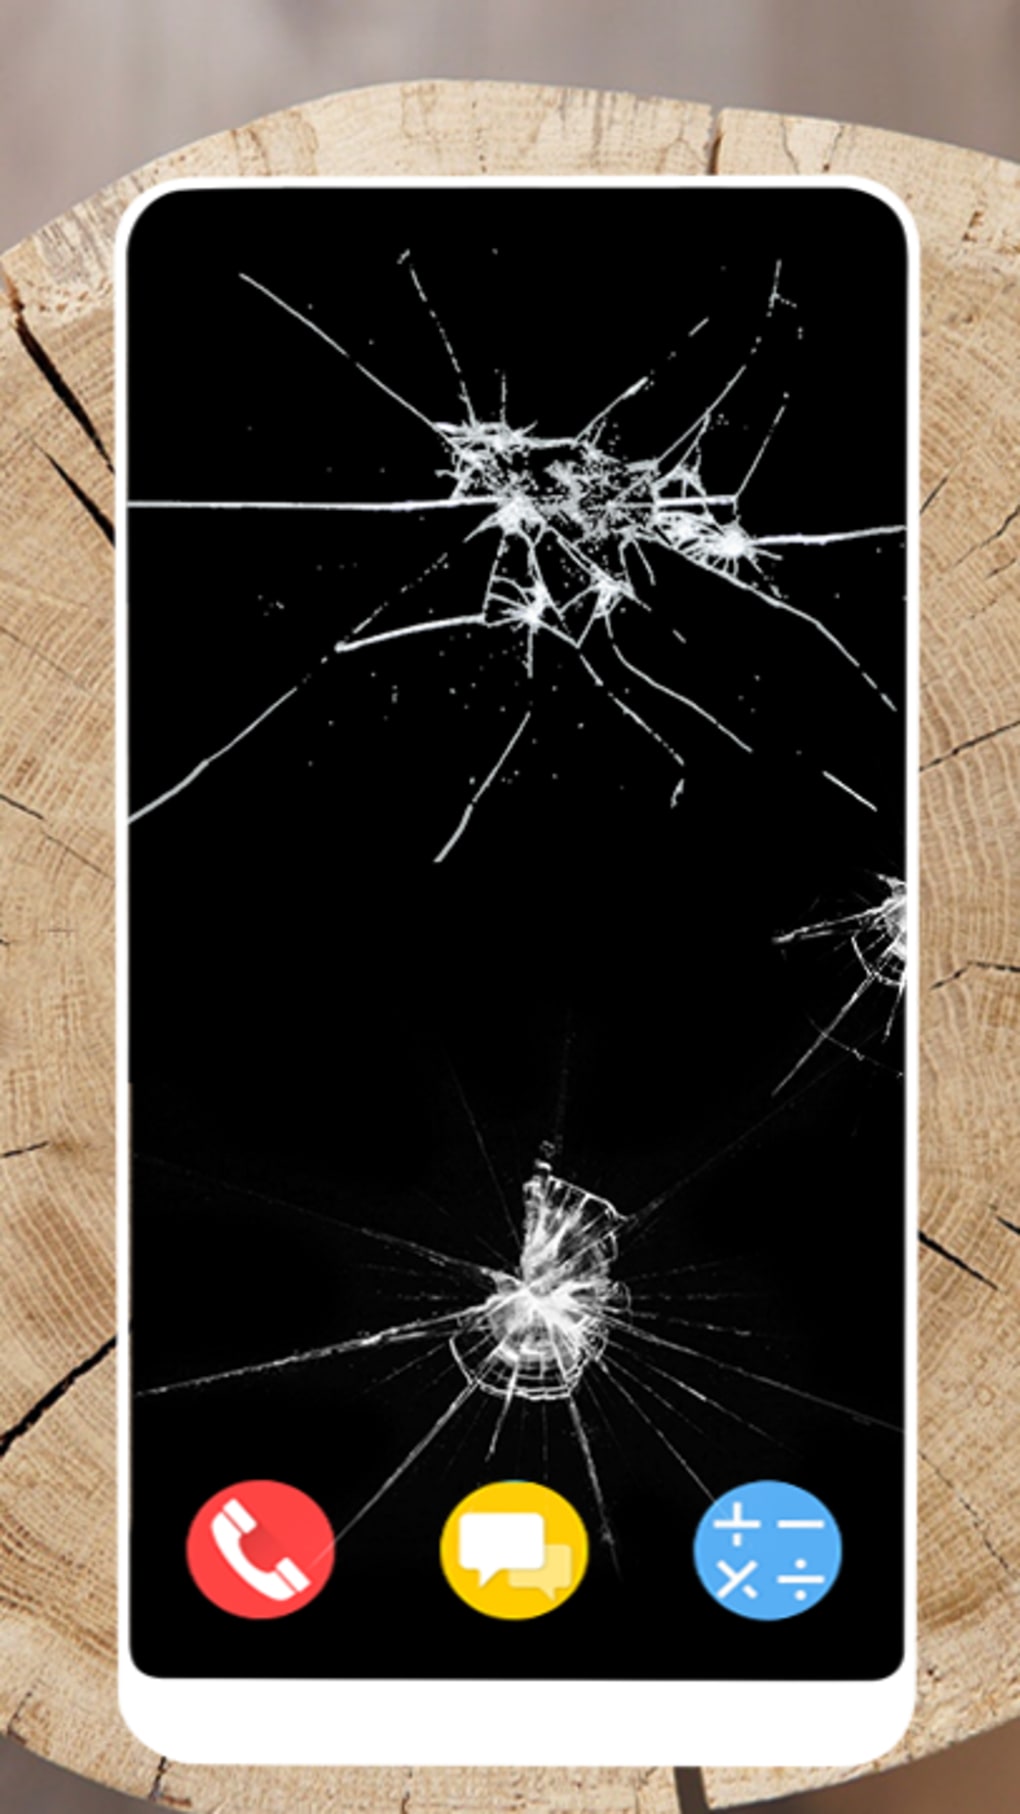 Cracked Screen Wallpapers - Top 25 Best Cracked Screen Backgrounds Download